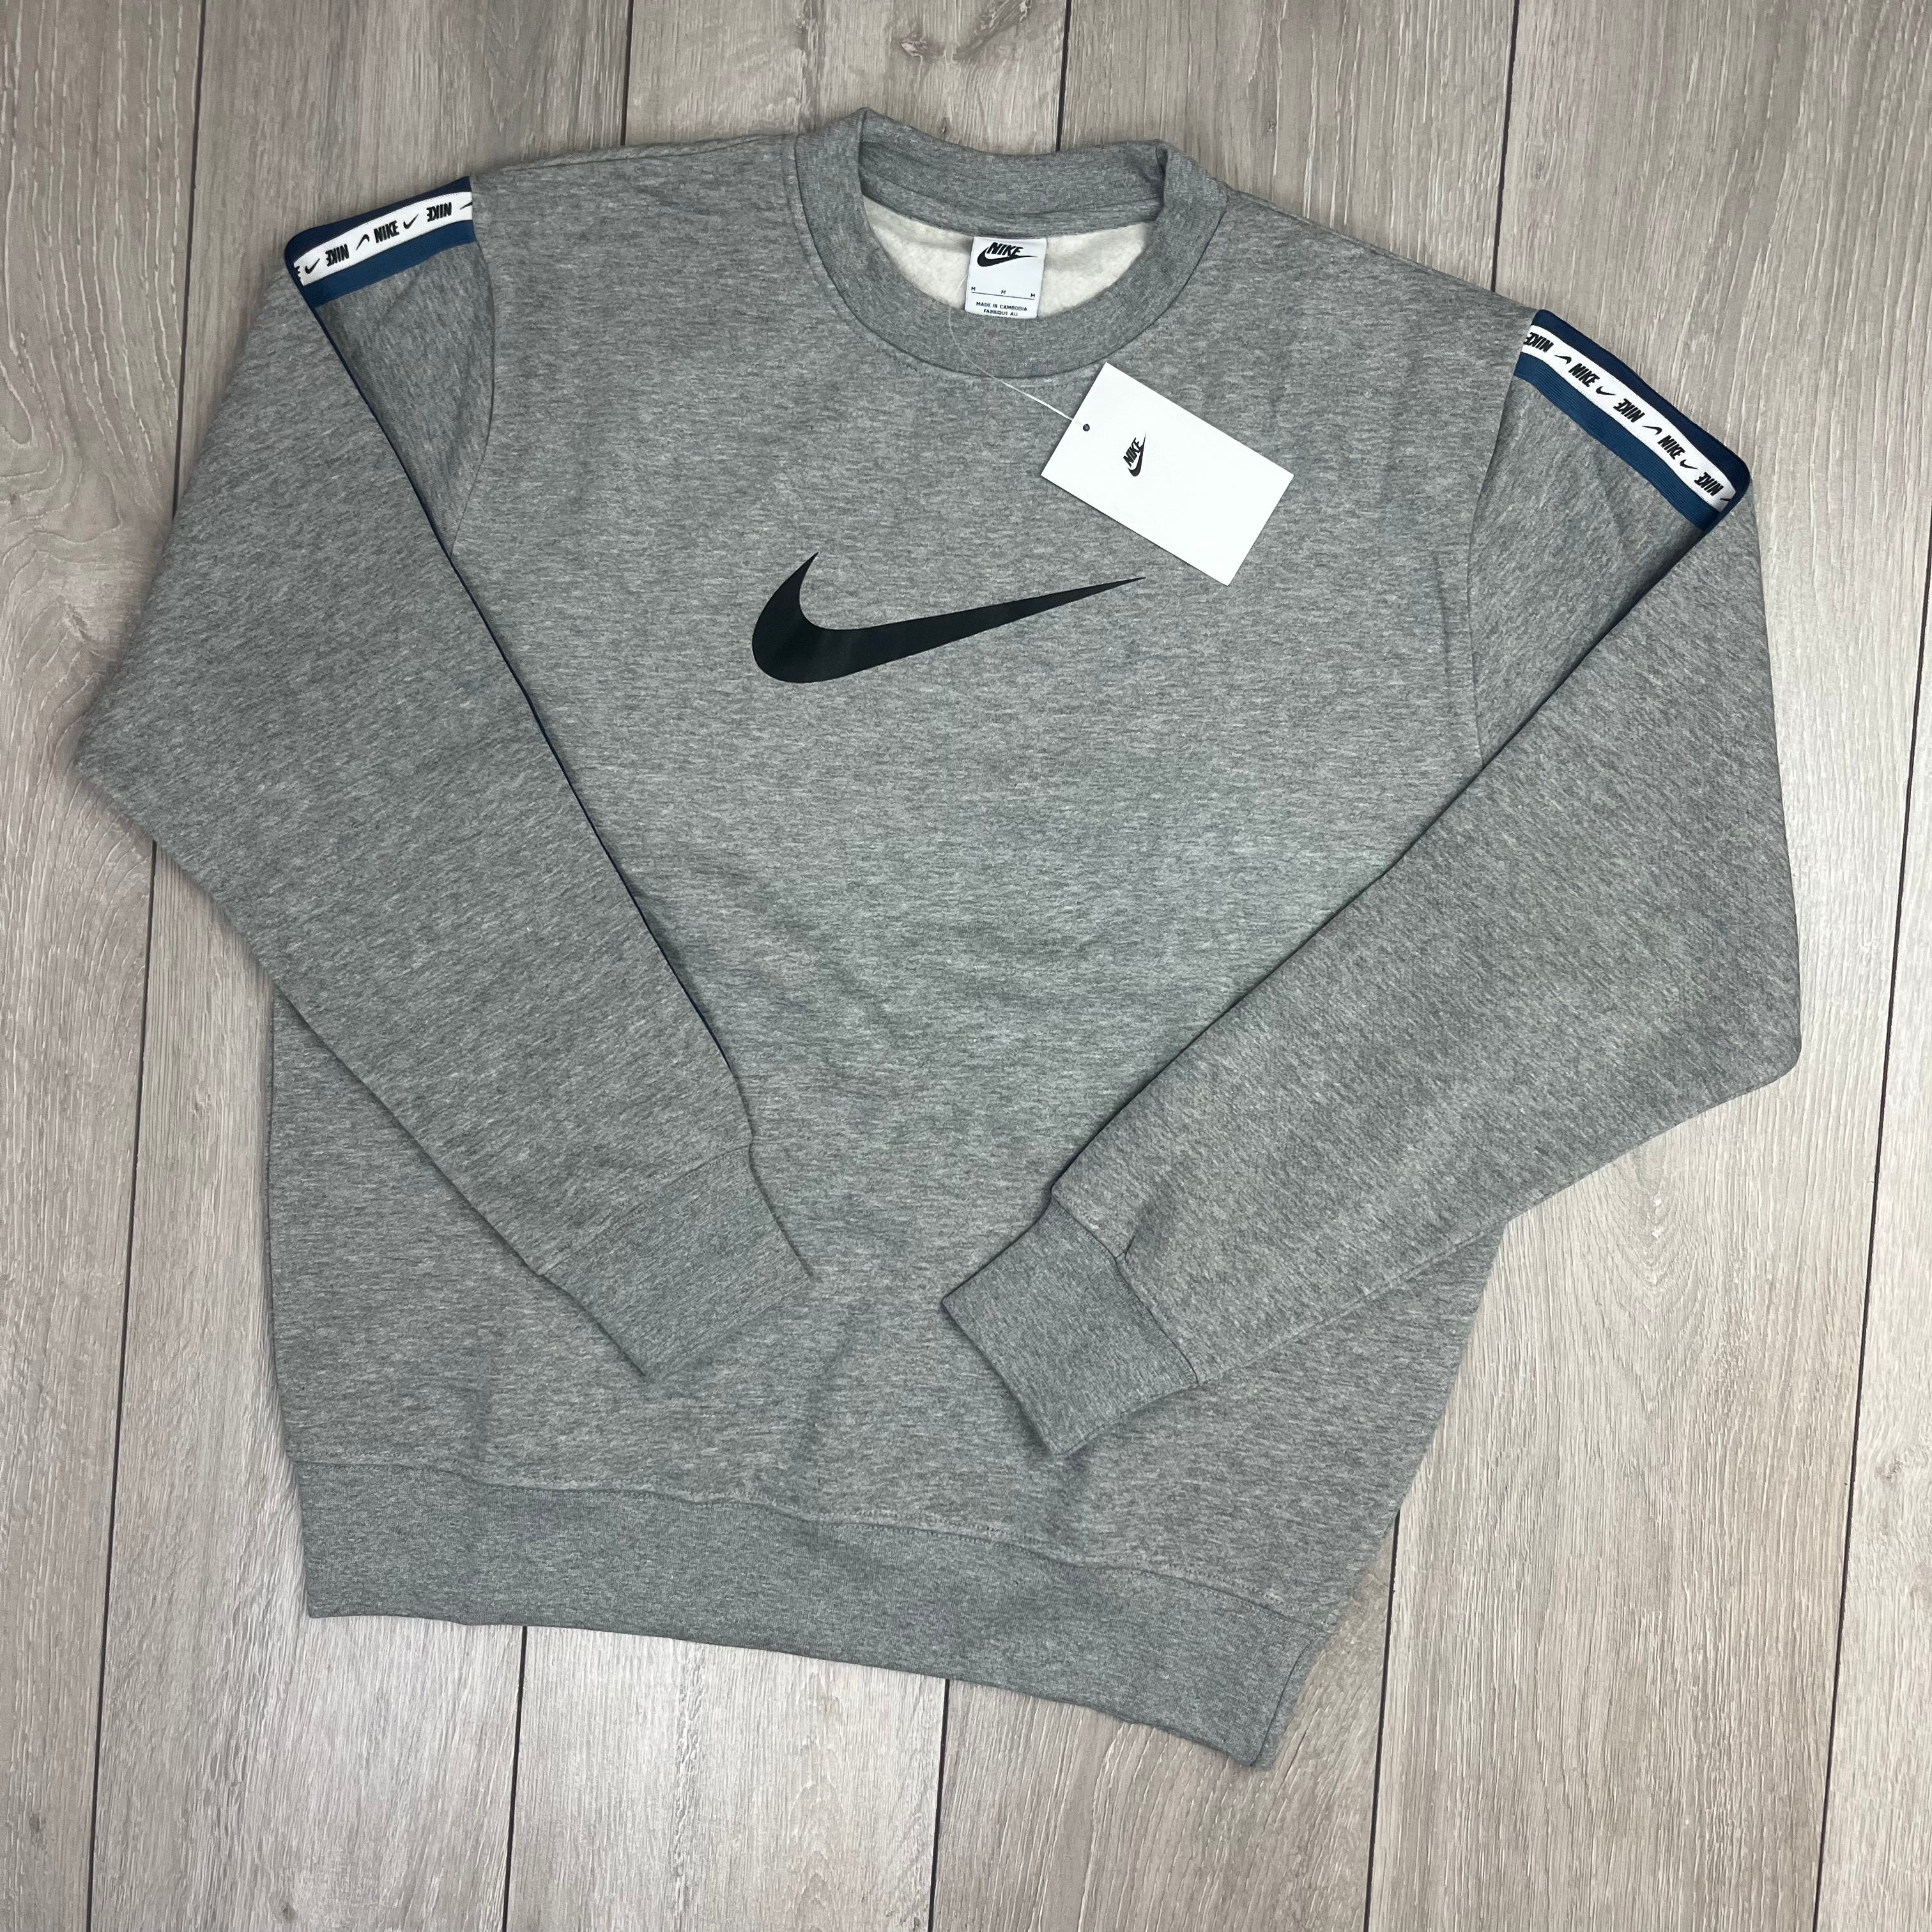 Nike Repeat Sweatshirt